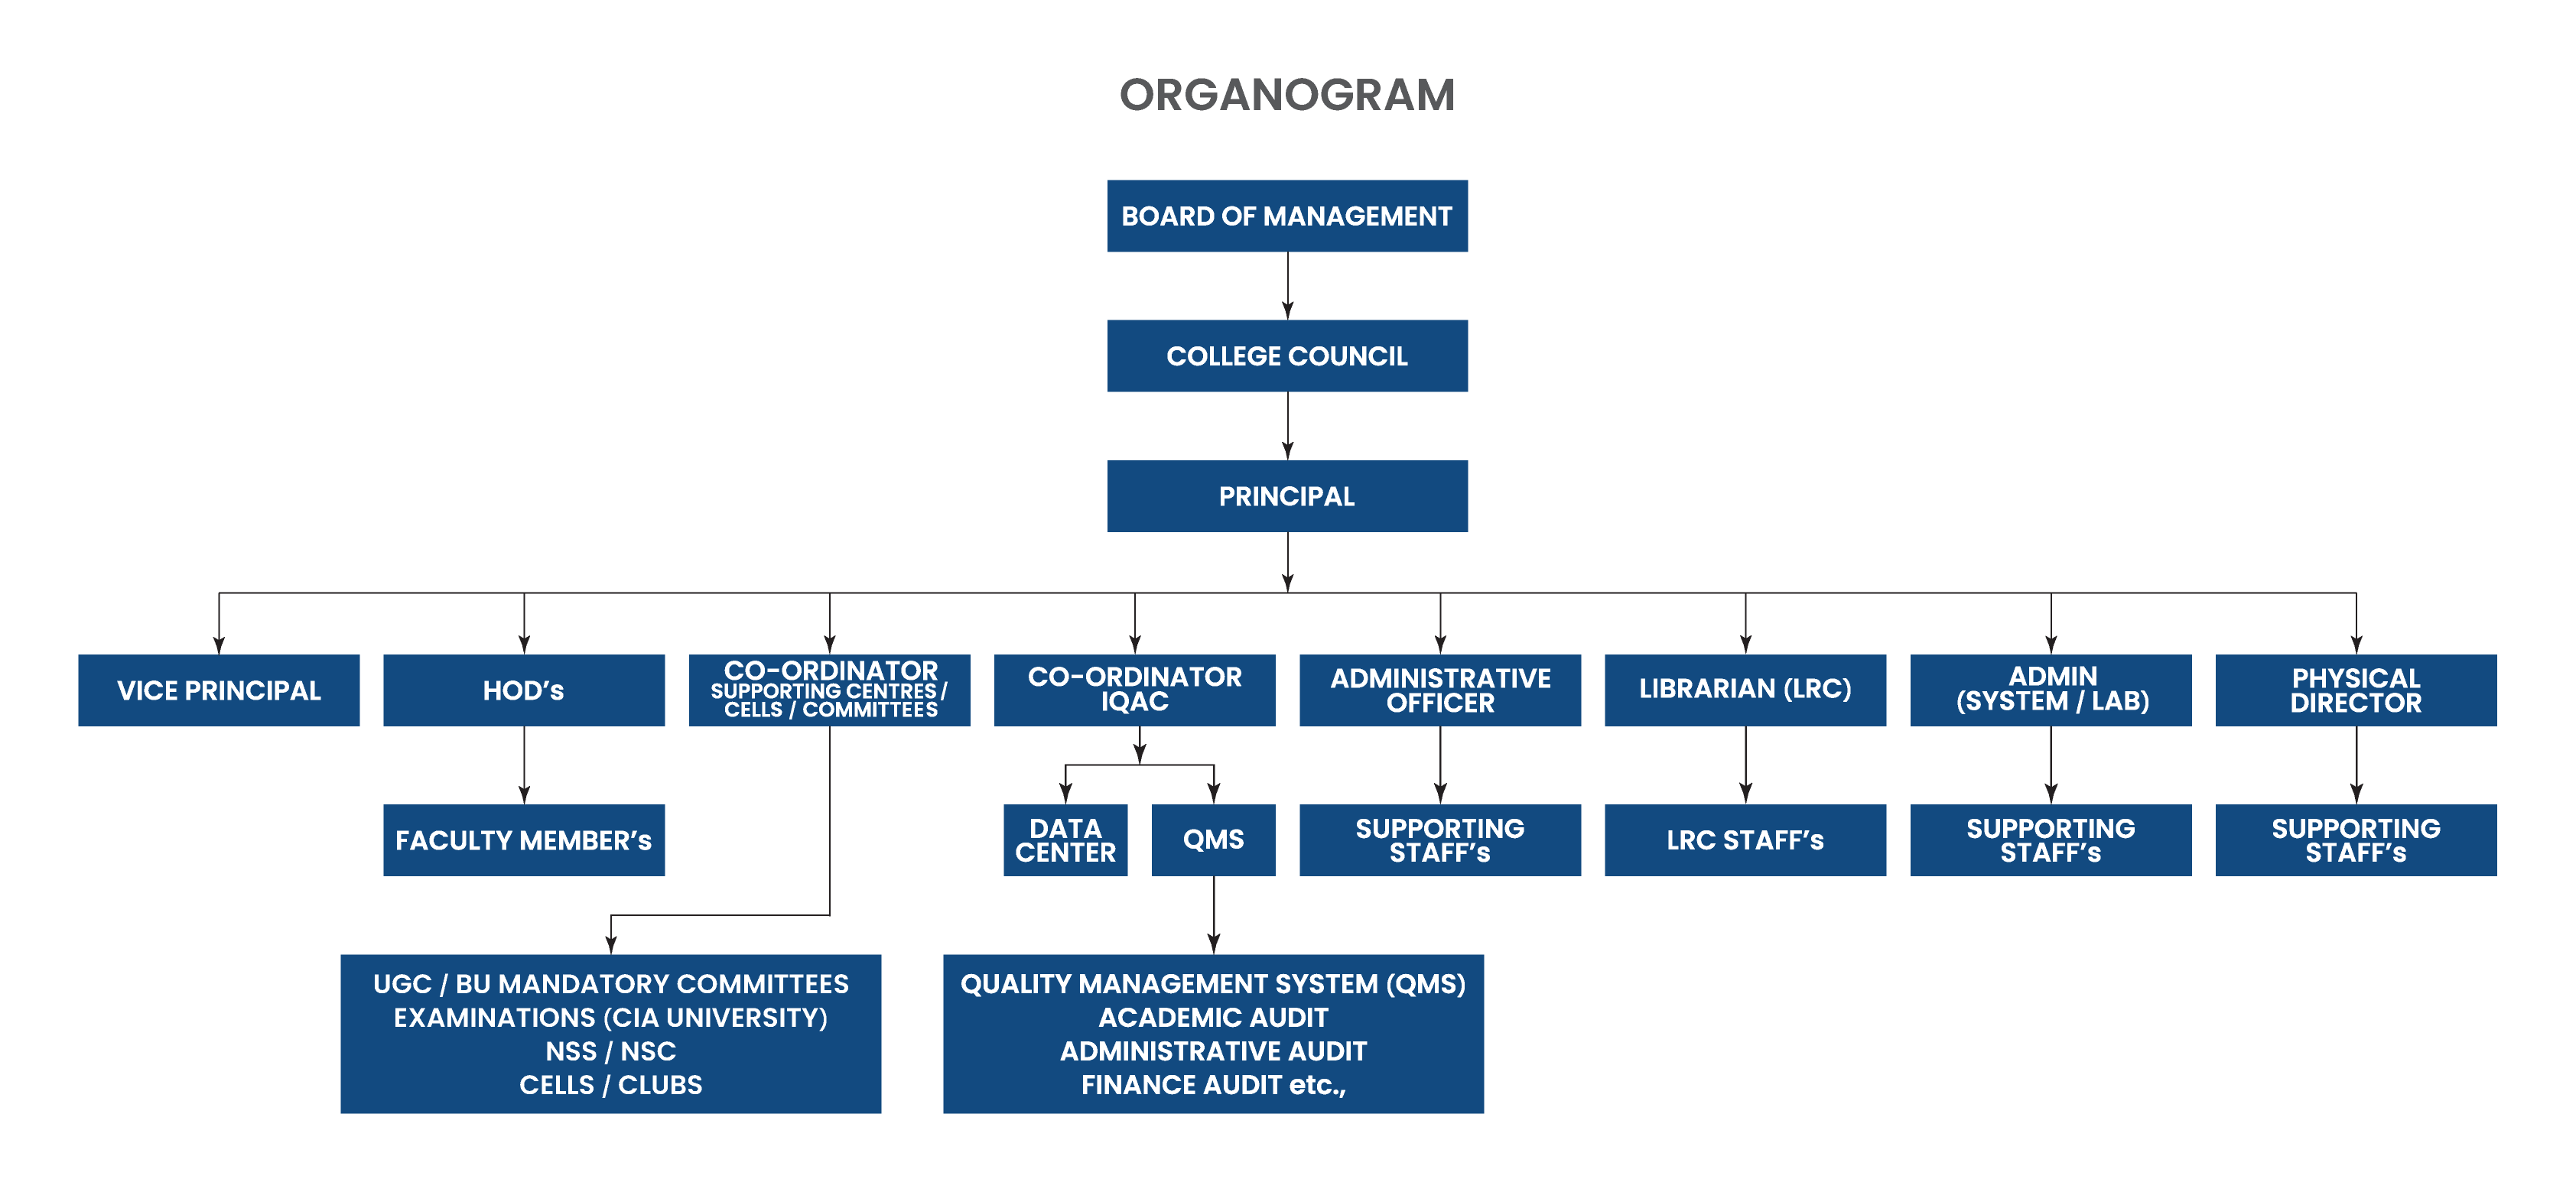 Organogram chart